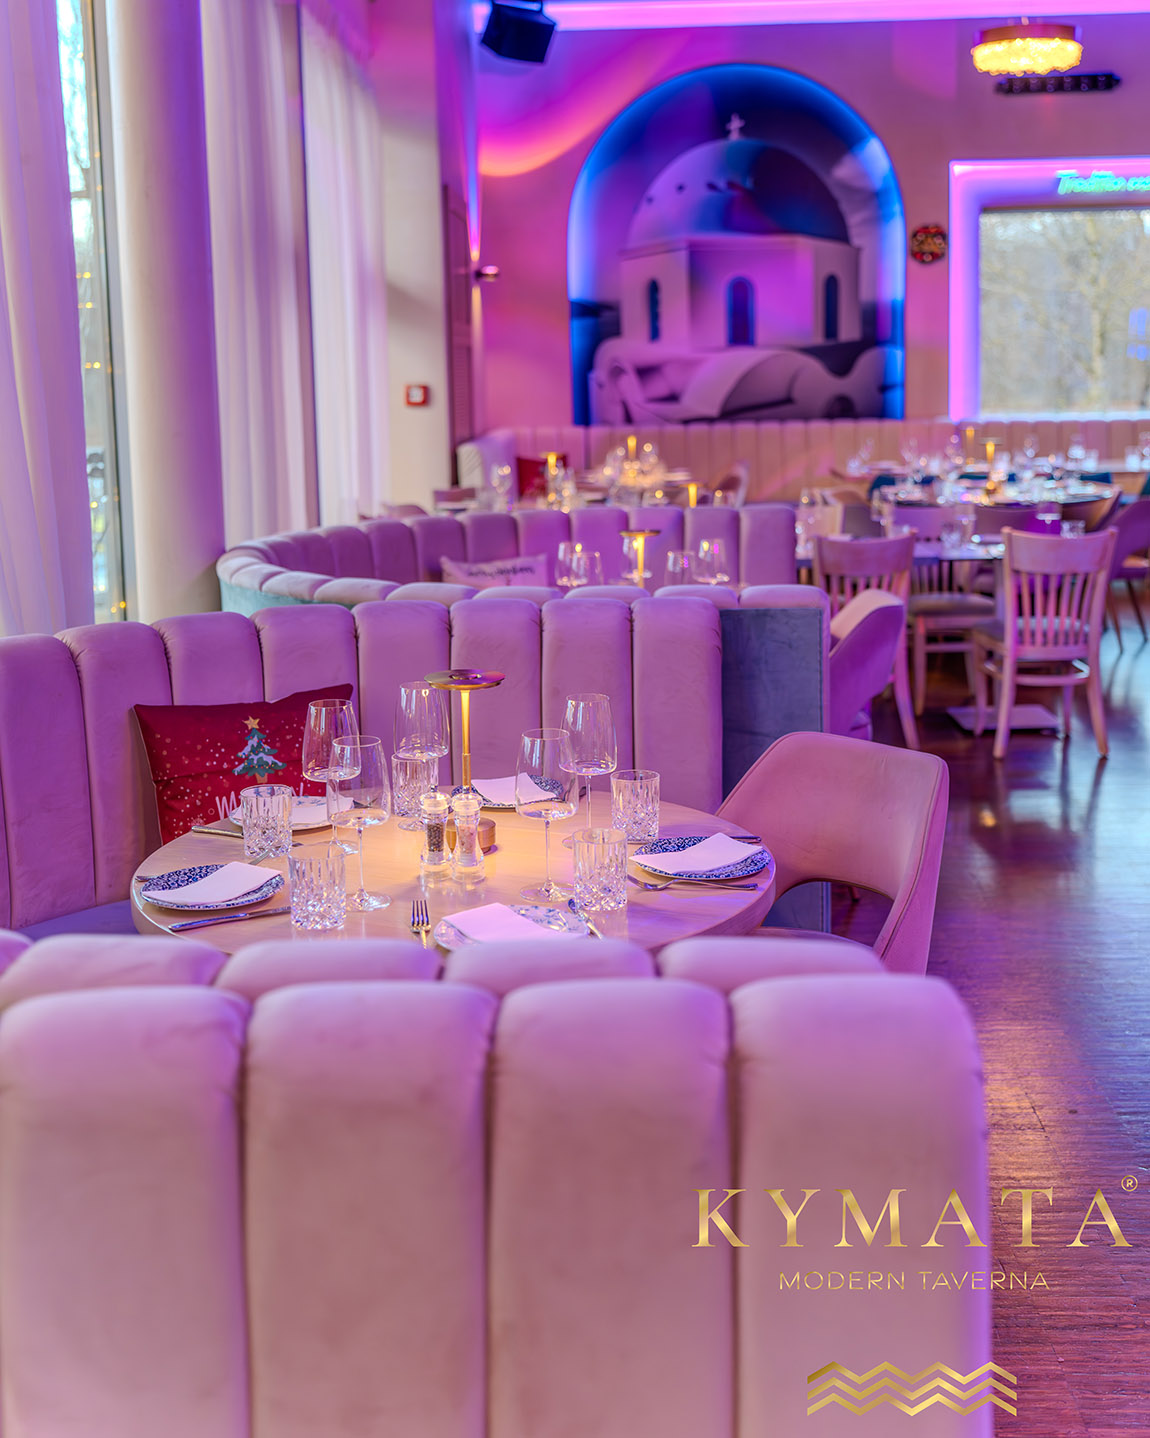 Kymata® Modern Taverna: A taste of Greek elegance in Munich